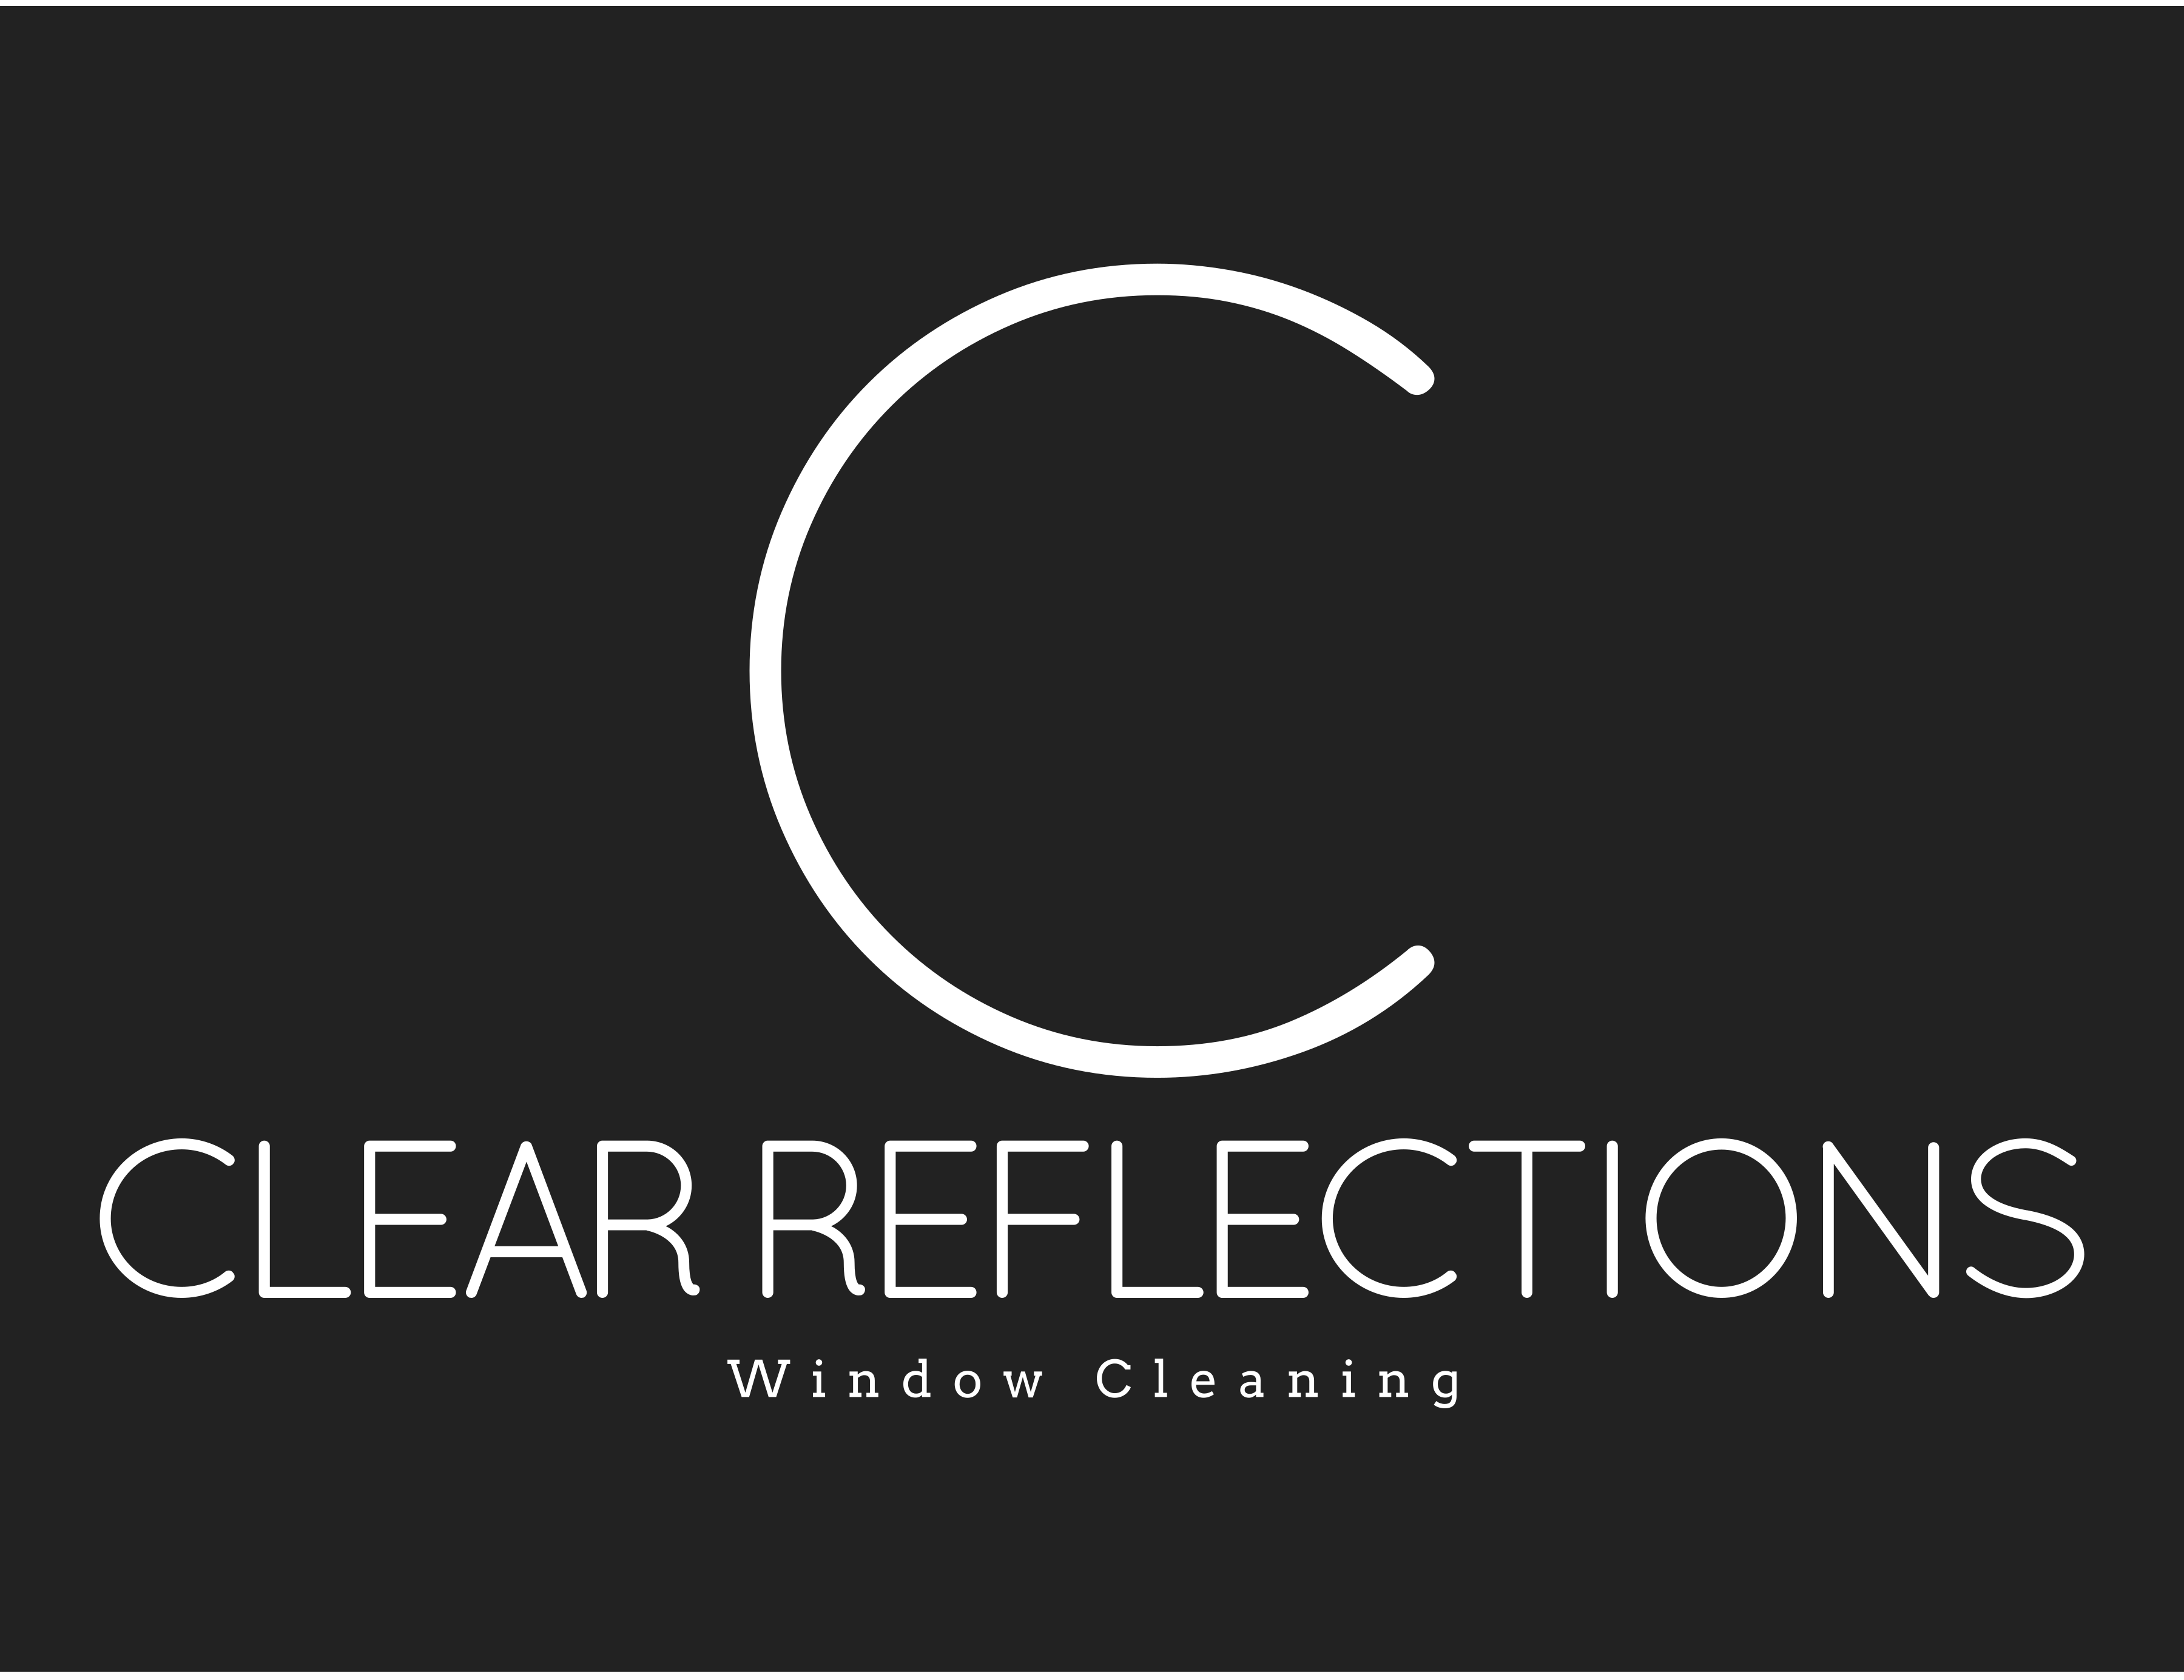 Reflections Logo - Clear Reflections logo - Logojoy